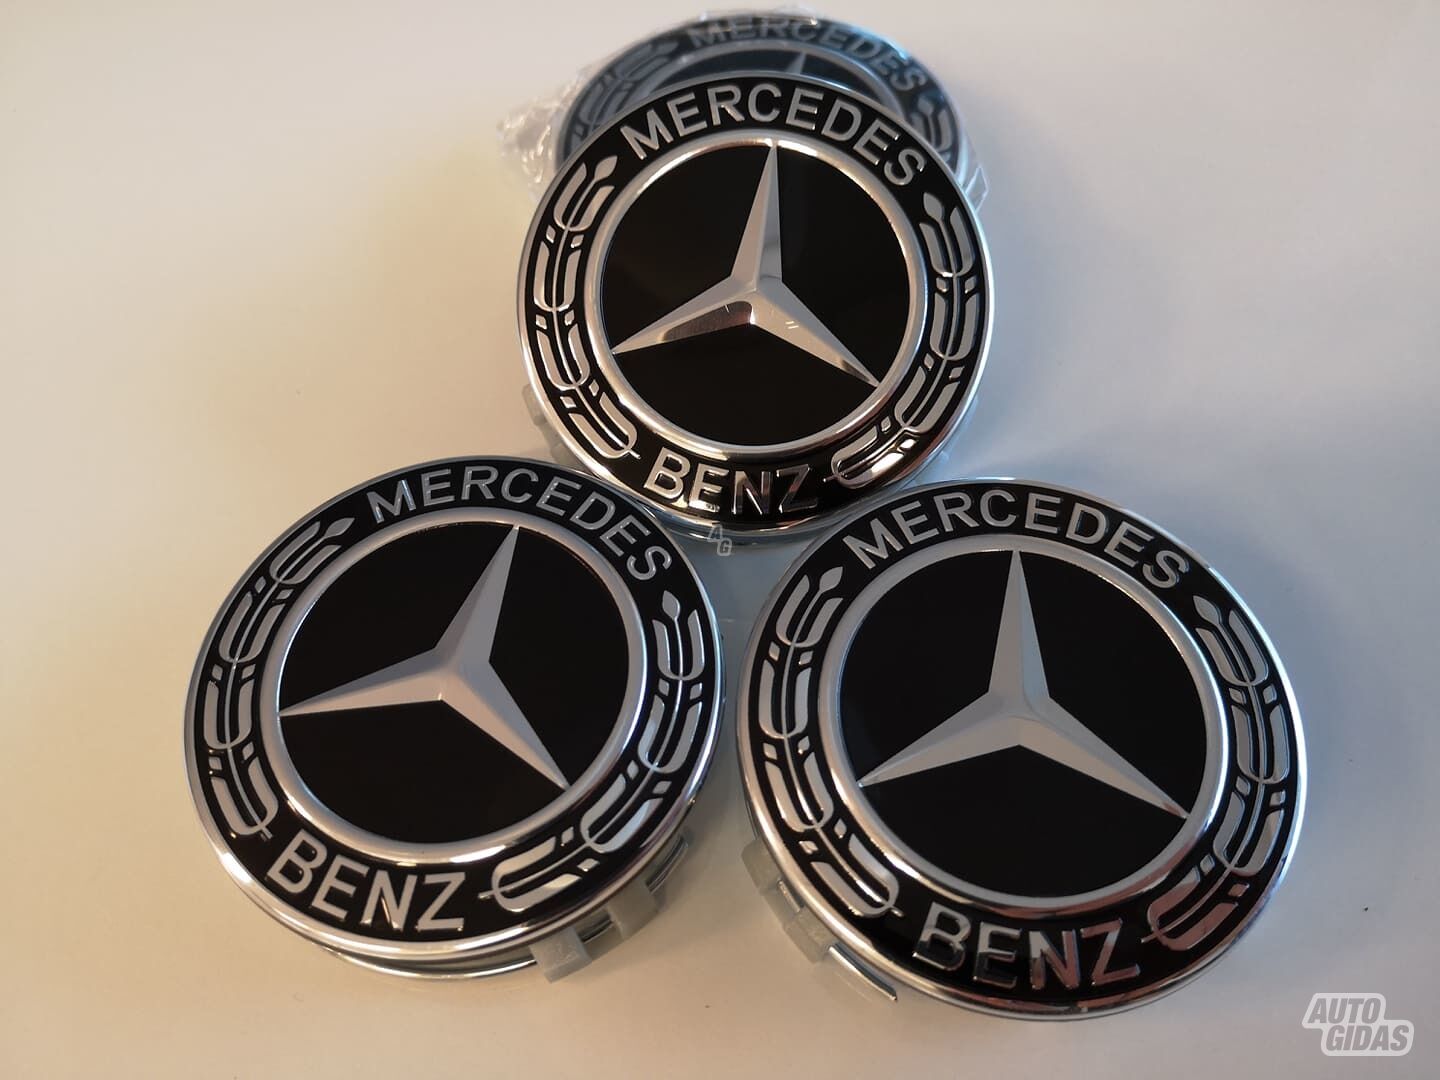 Mercedes-Benz R18 wheel covers